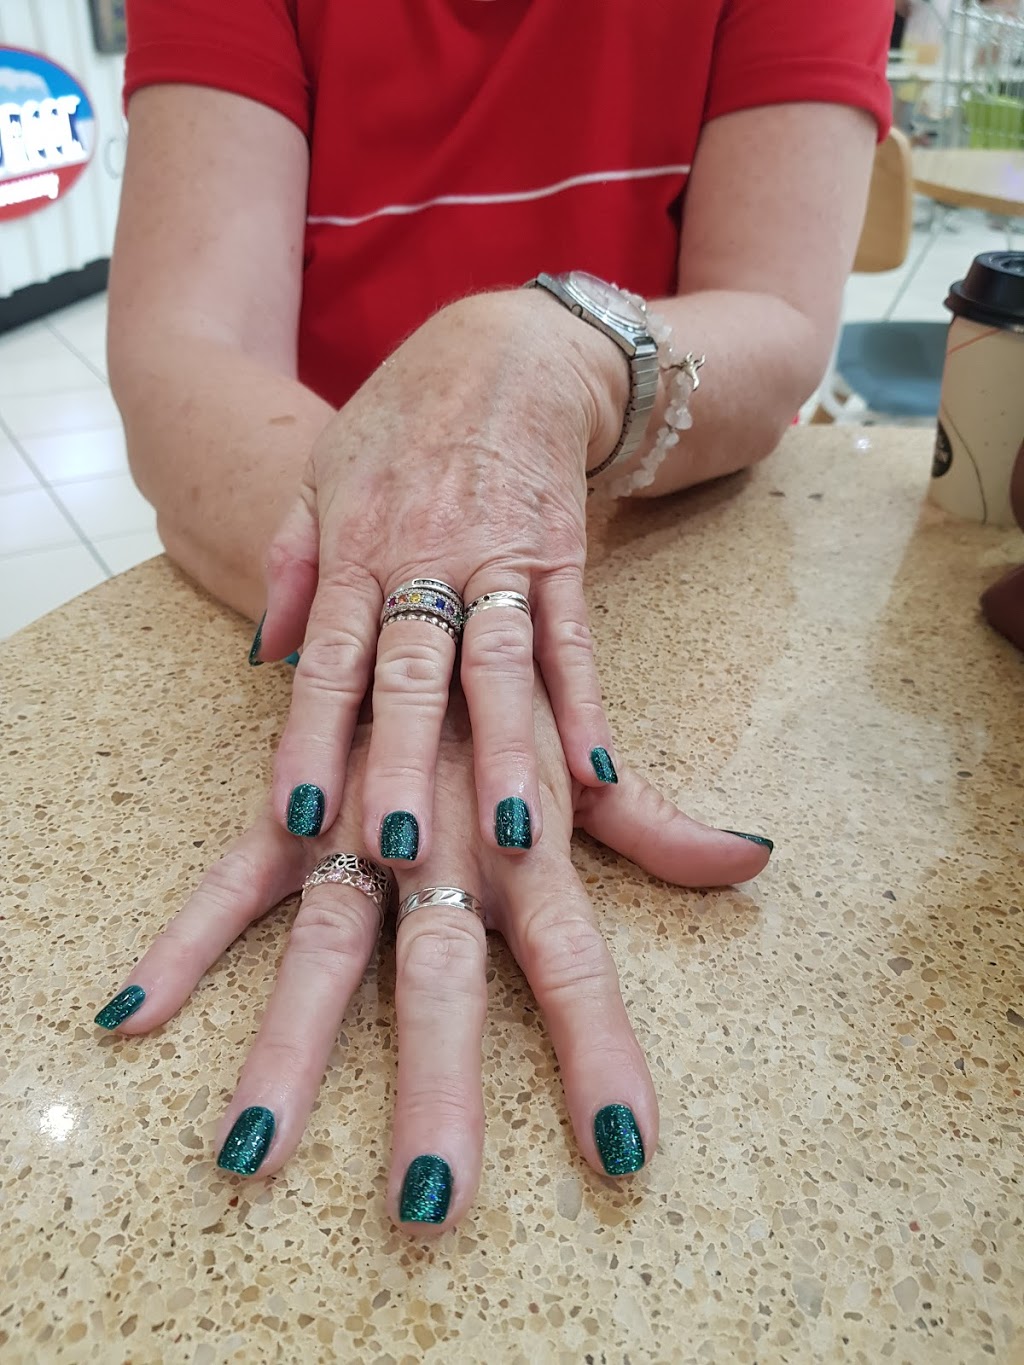 Rainbow Nails | Shop 47/2 Town Centre Cct, Salamander Bay NSW 2317, Australia | Phone: (02) 4982 7801